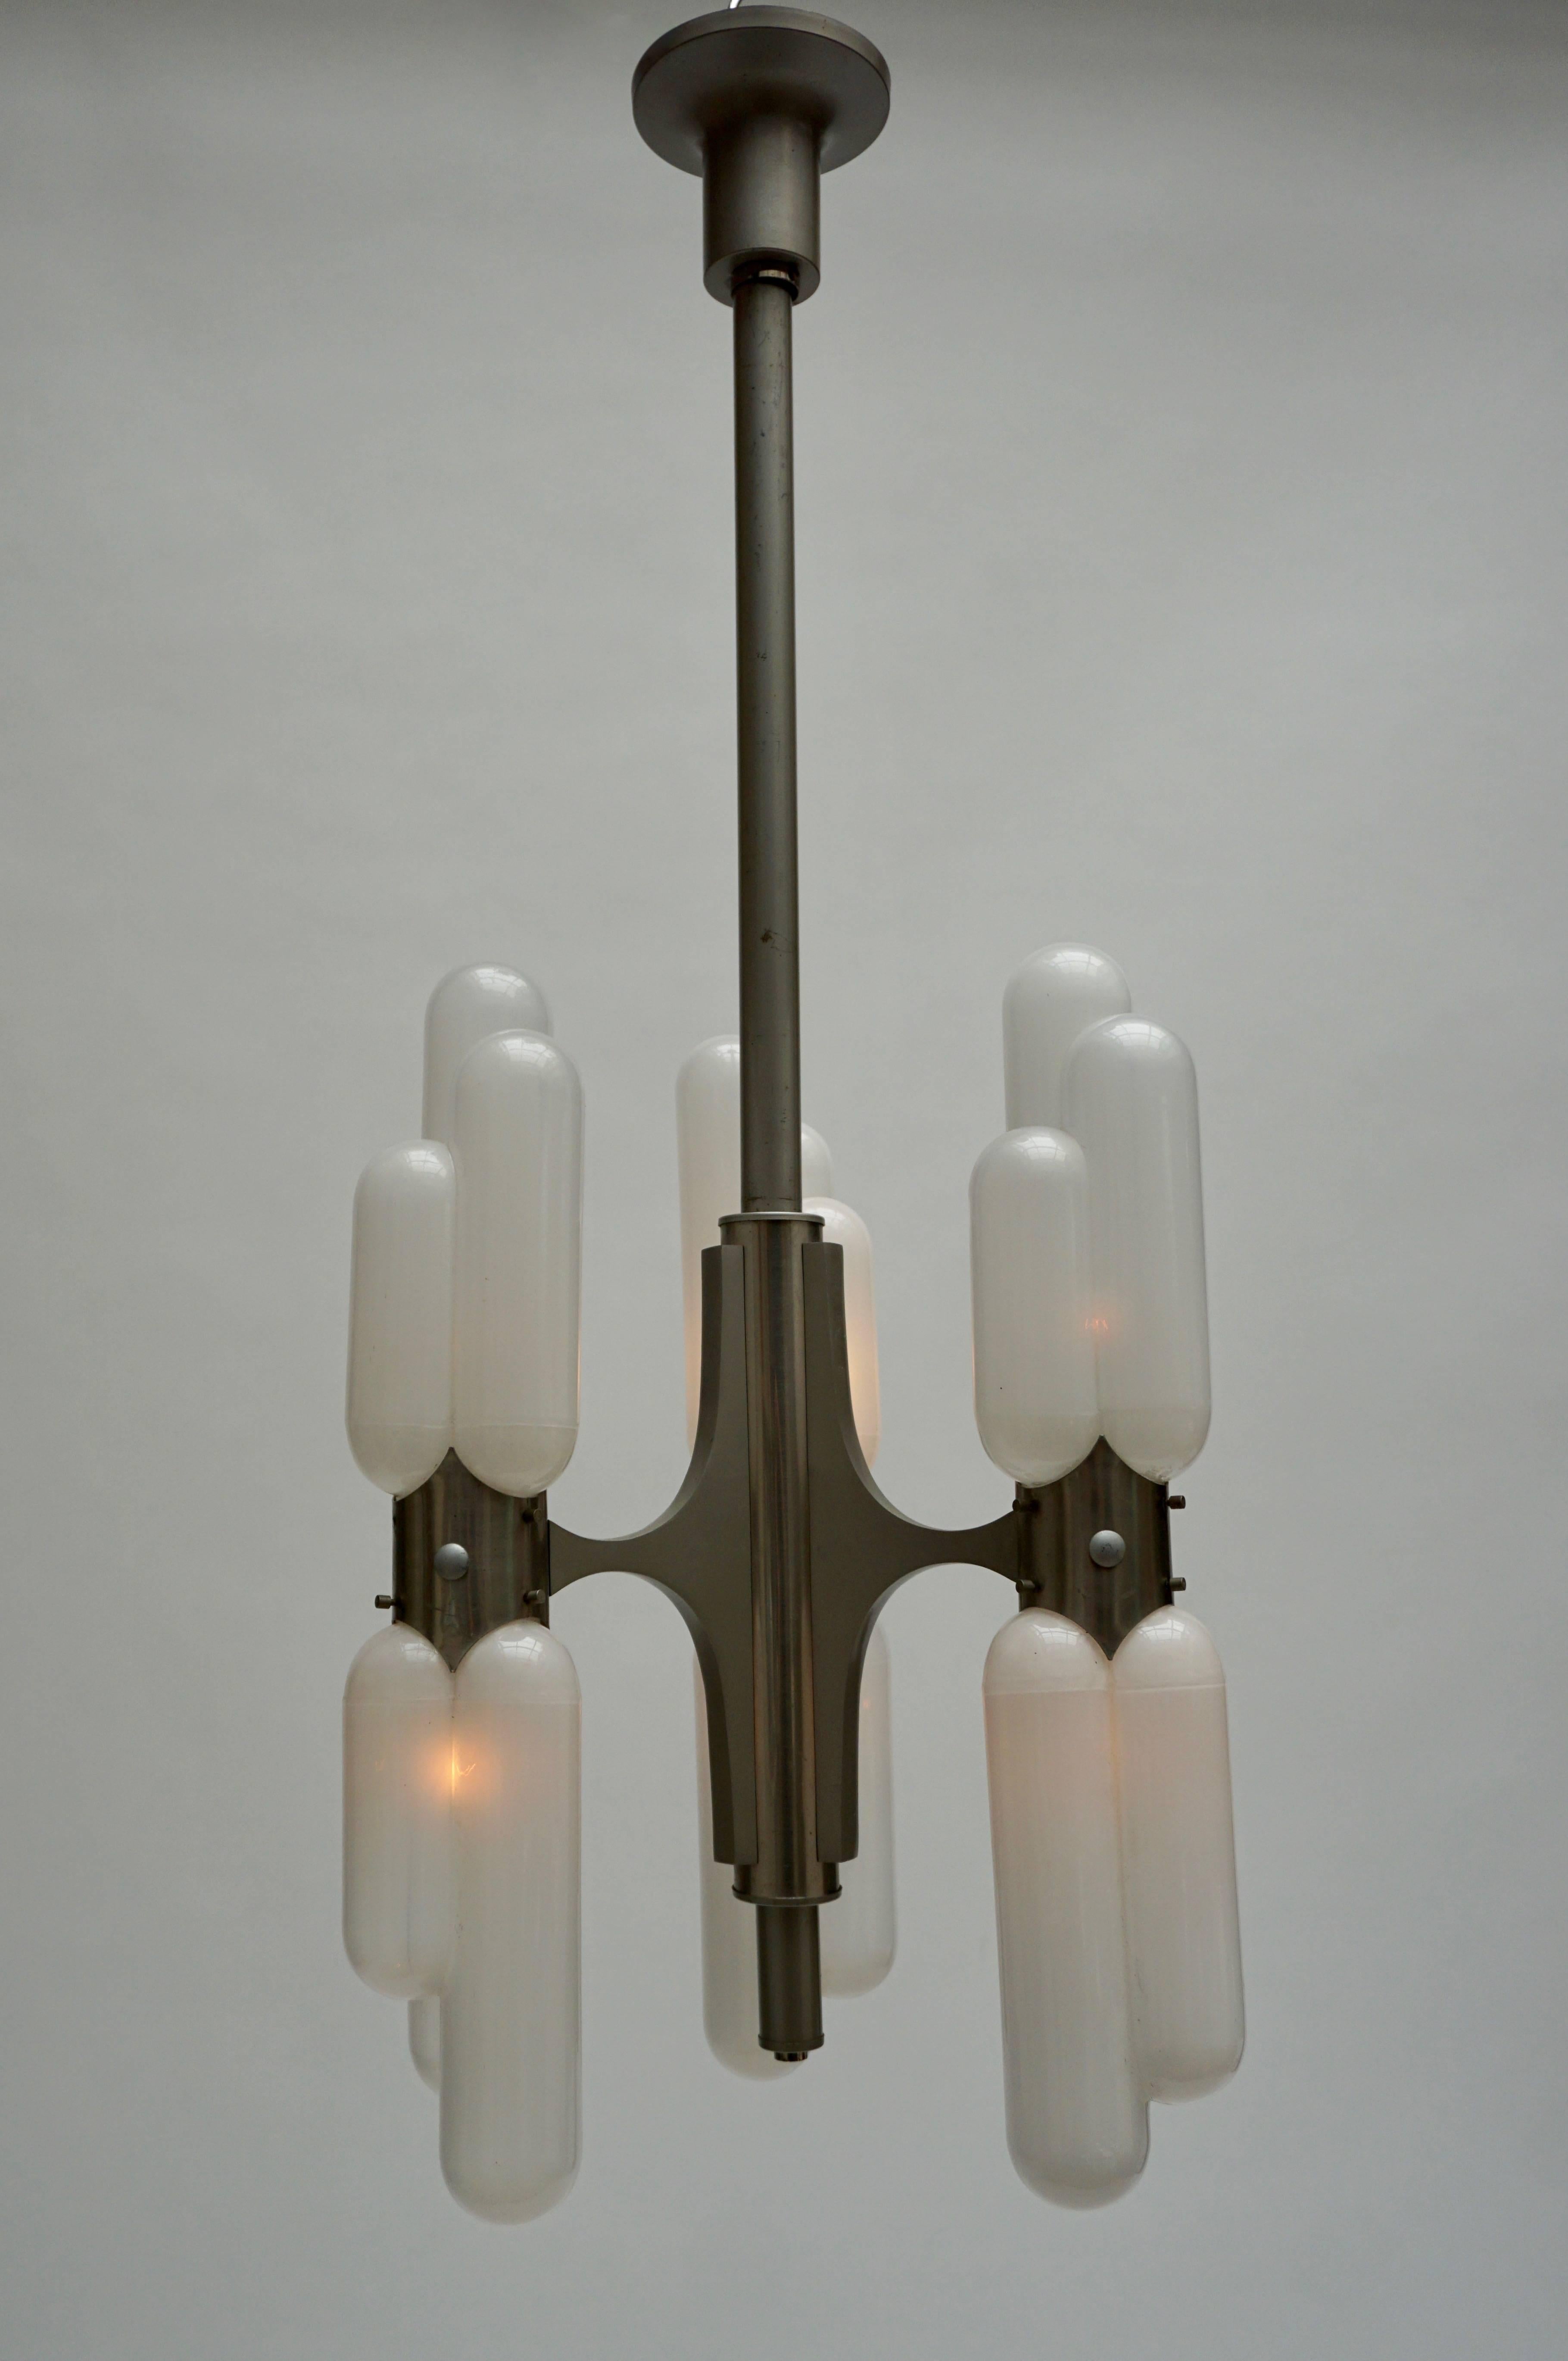 Murano glass chandelier by Carlo Nason.
Measures: Diameter 38 cm.
Height 100 cm.
Six E14 bulbs.